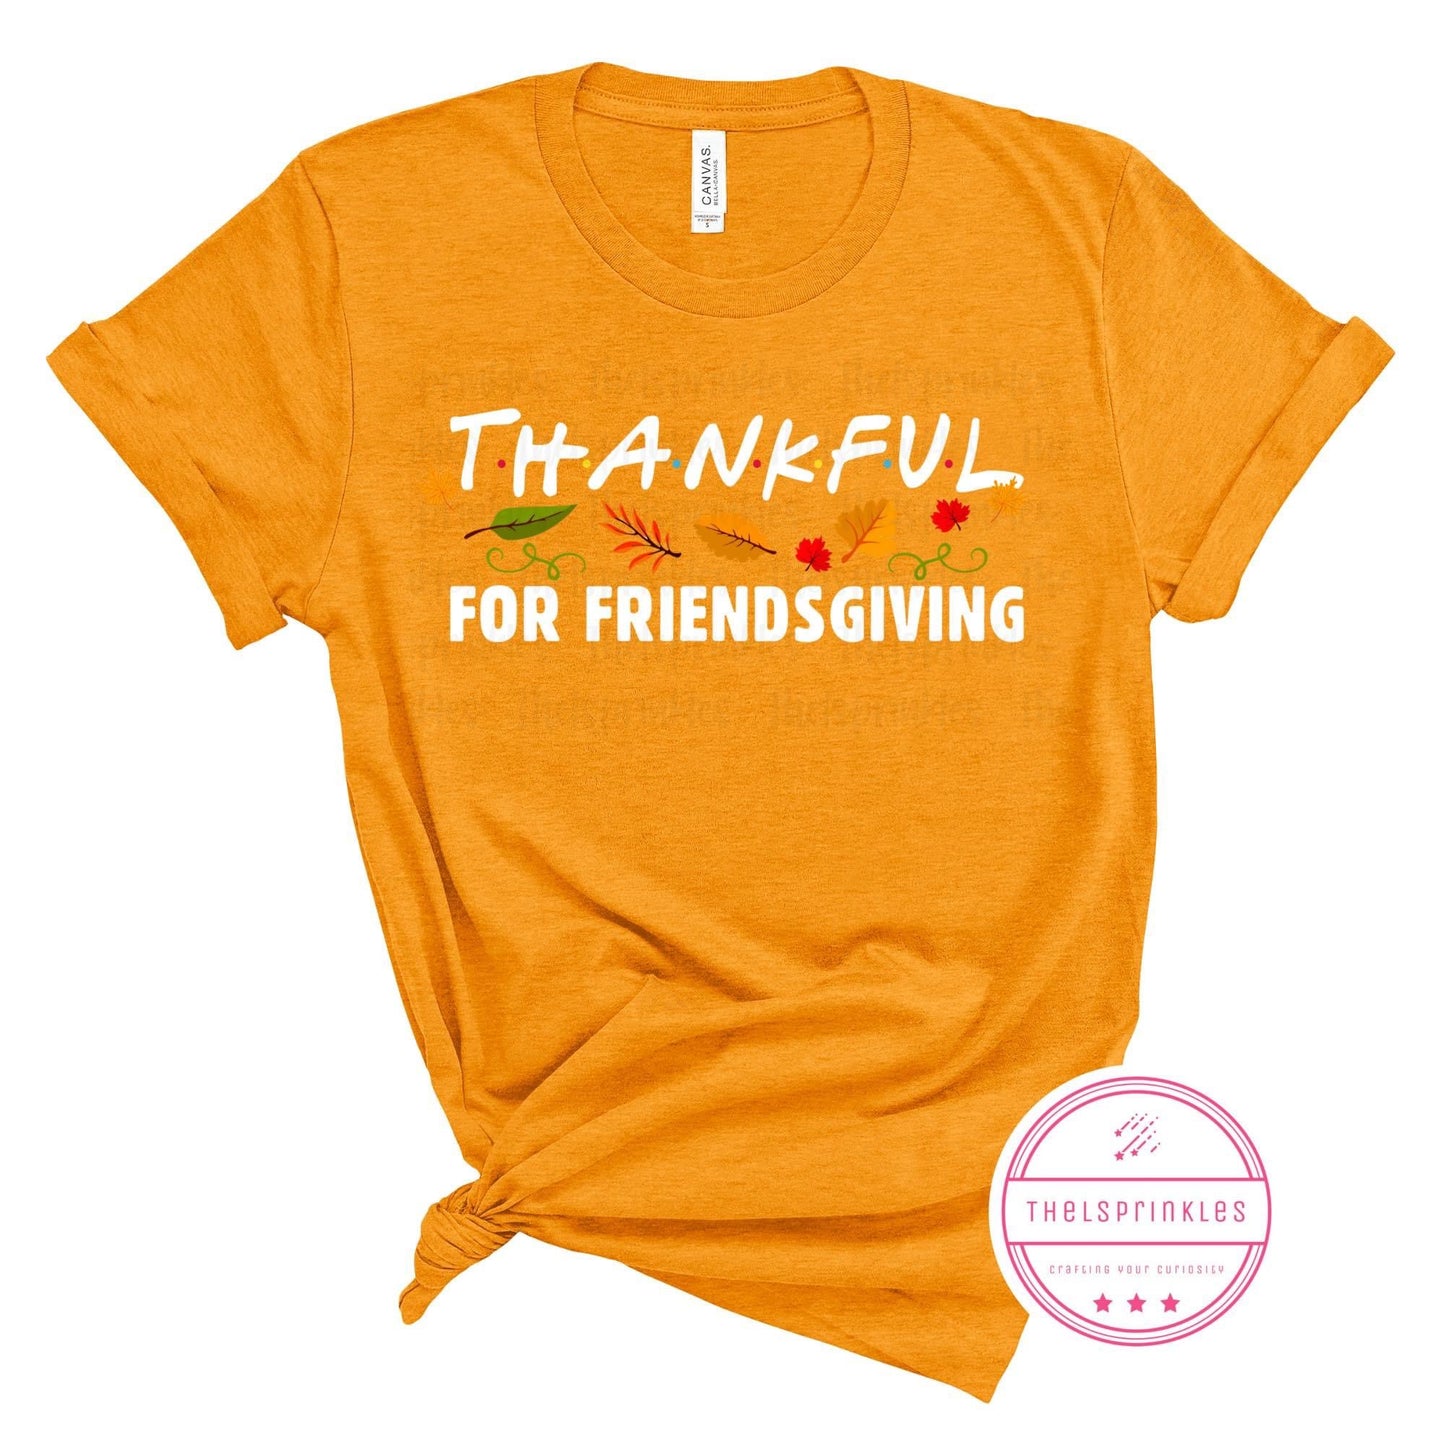 Thankful for friendsgiving